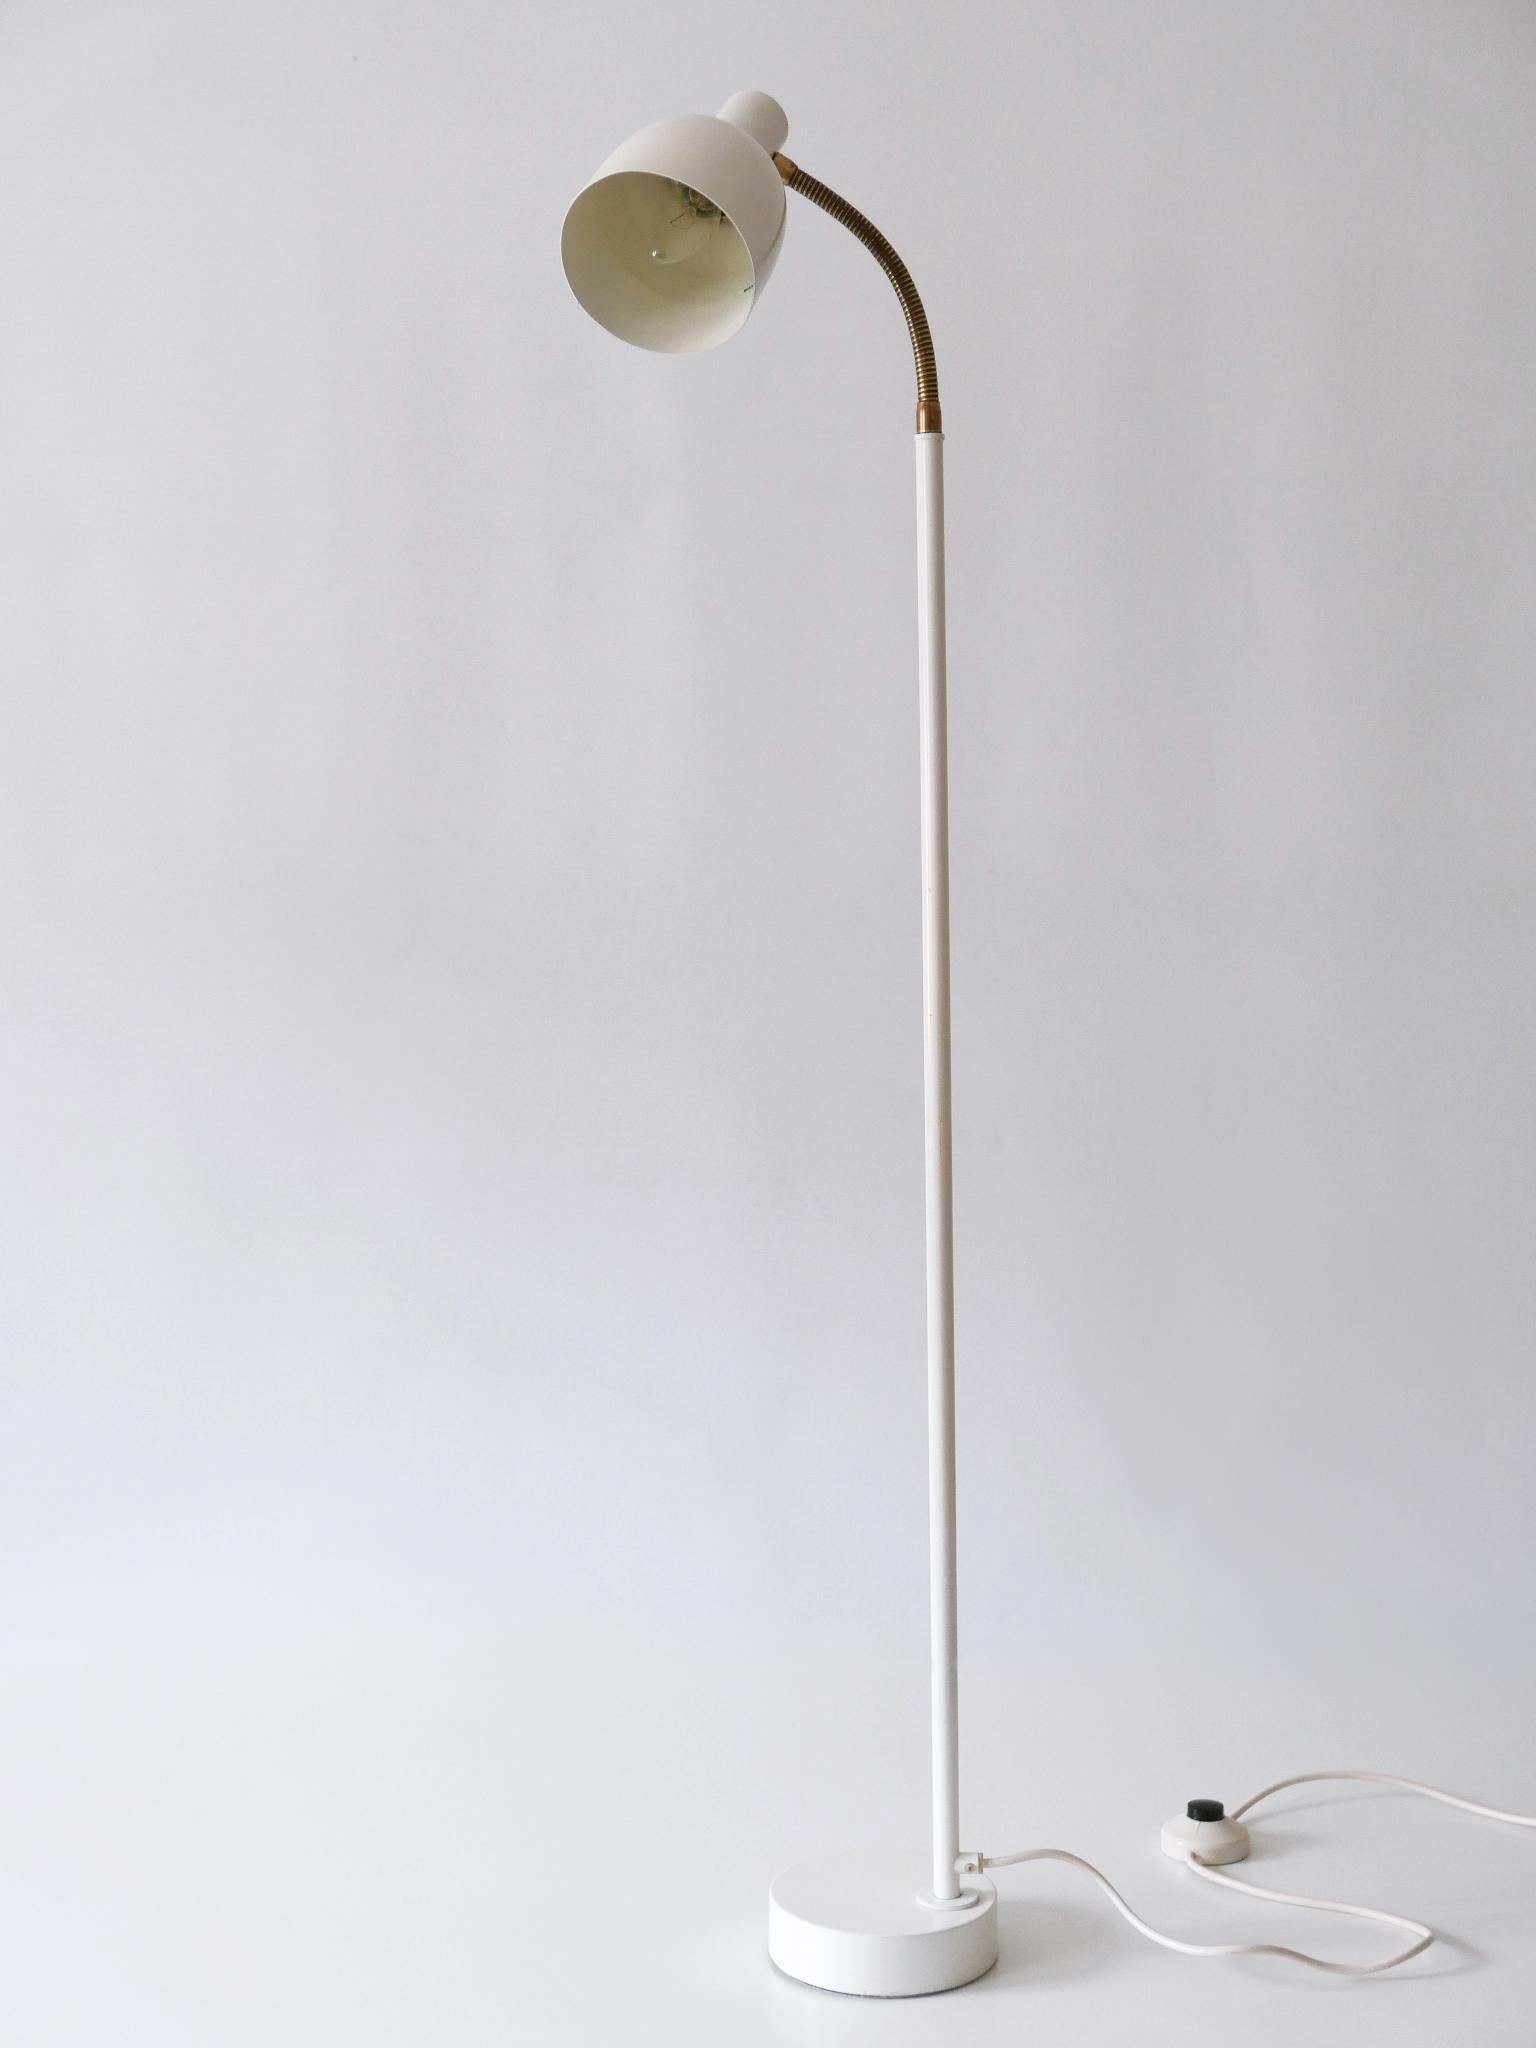 Rare Mid-Century Modern Floor Lamp or Reading Light by Hans-Agne Jakobsson 1960s For Sale 7